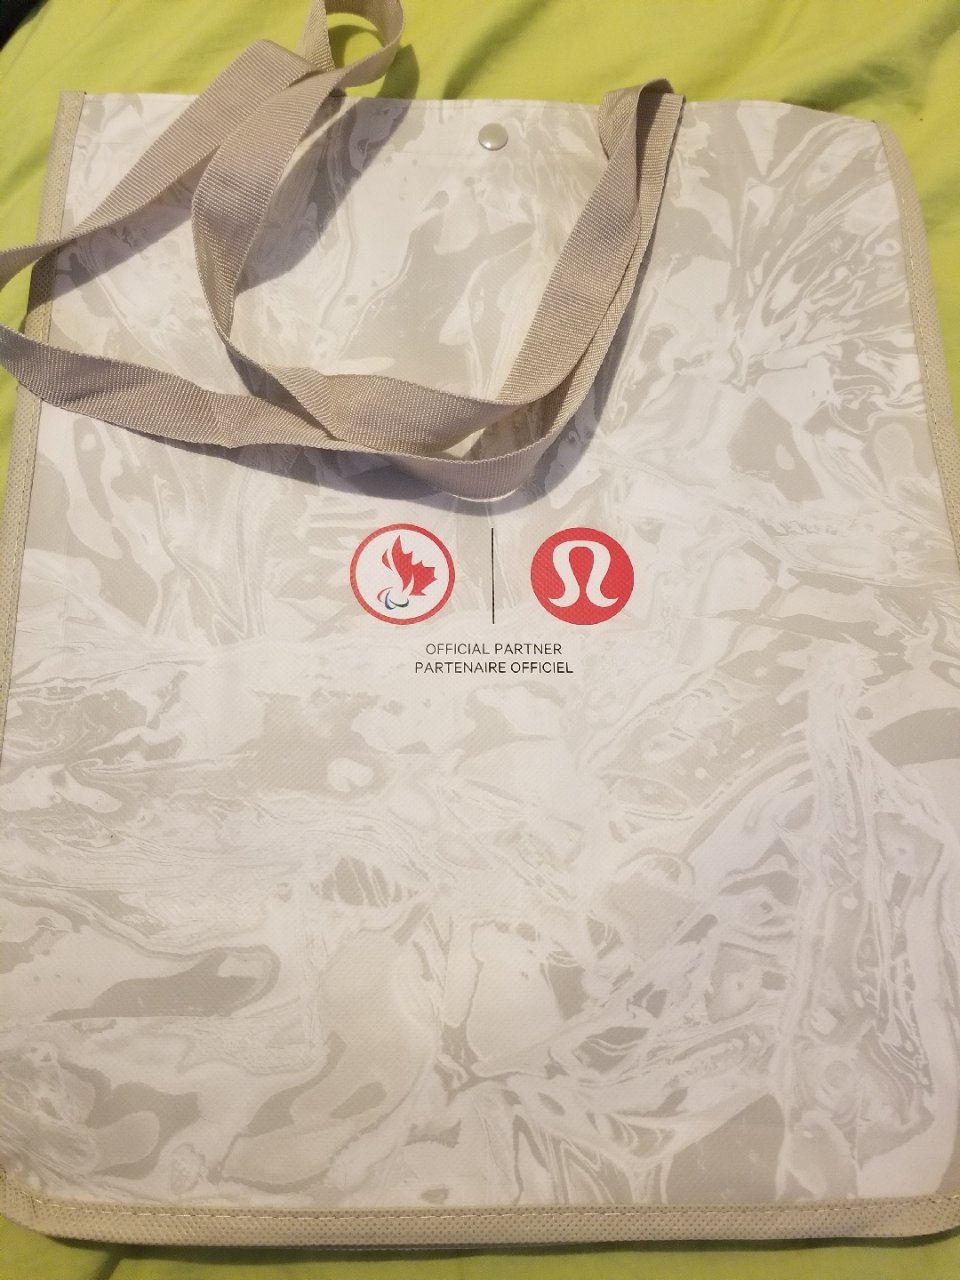 lululemon 的新购物袋...